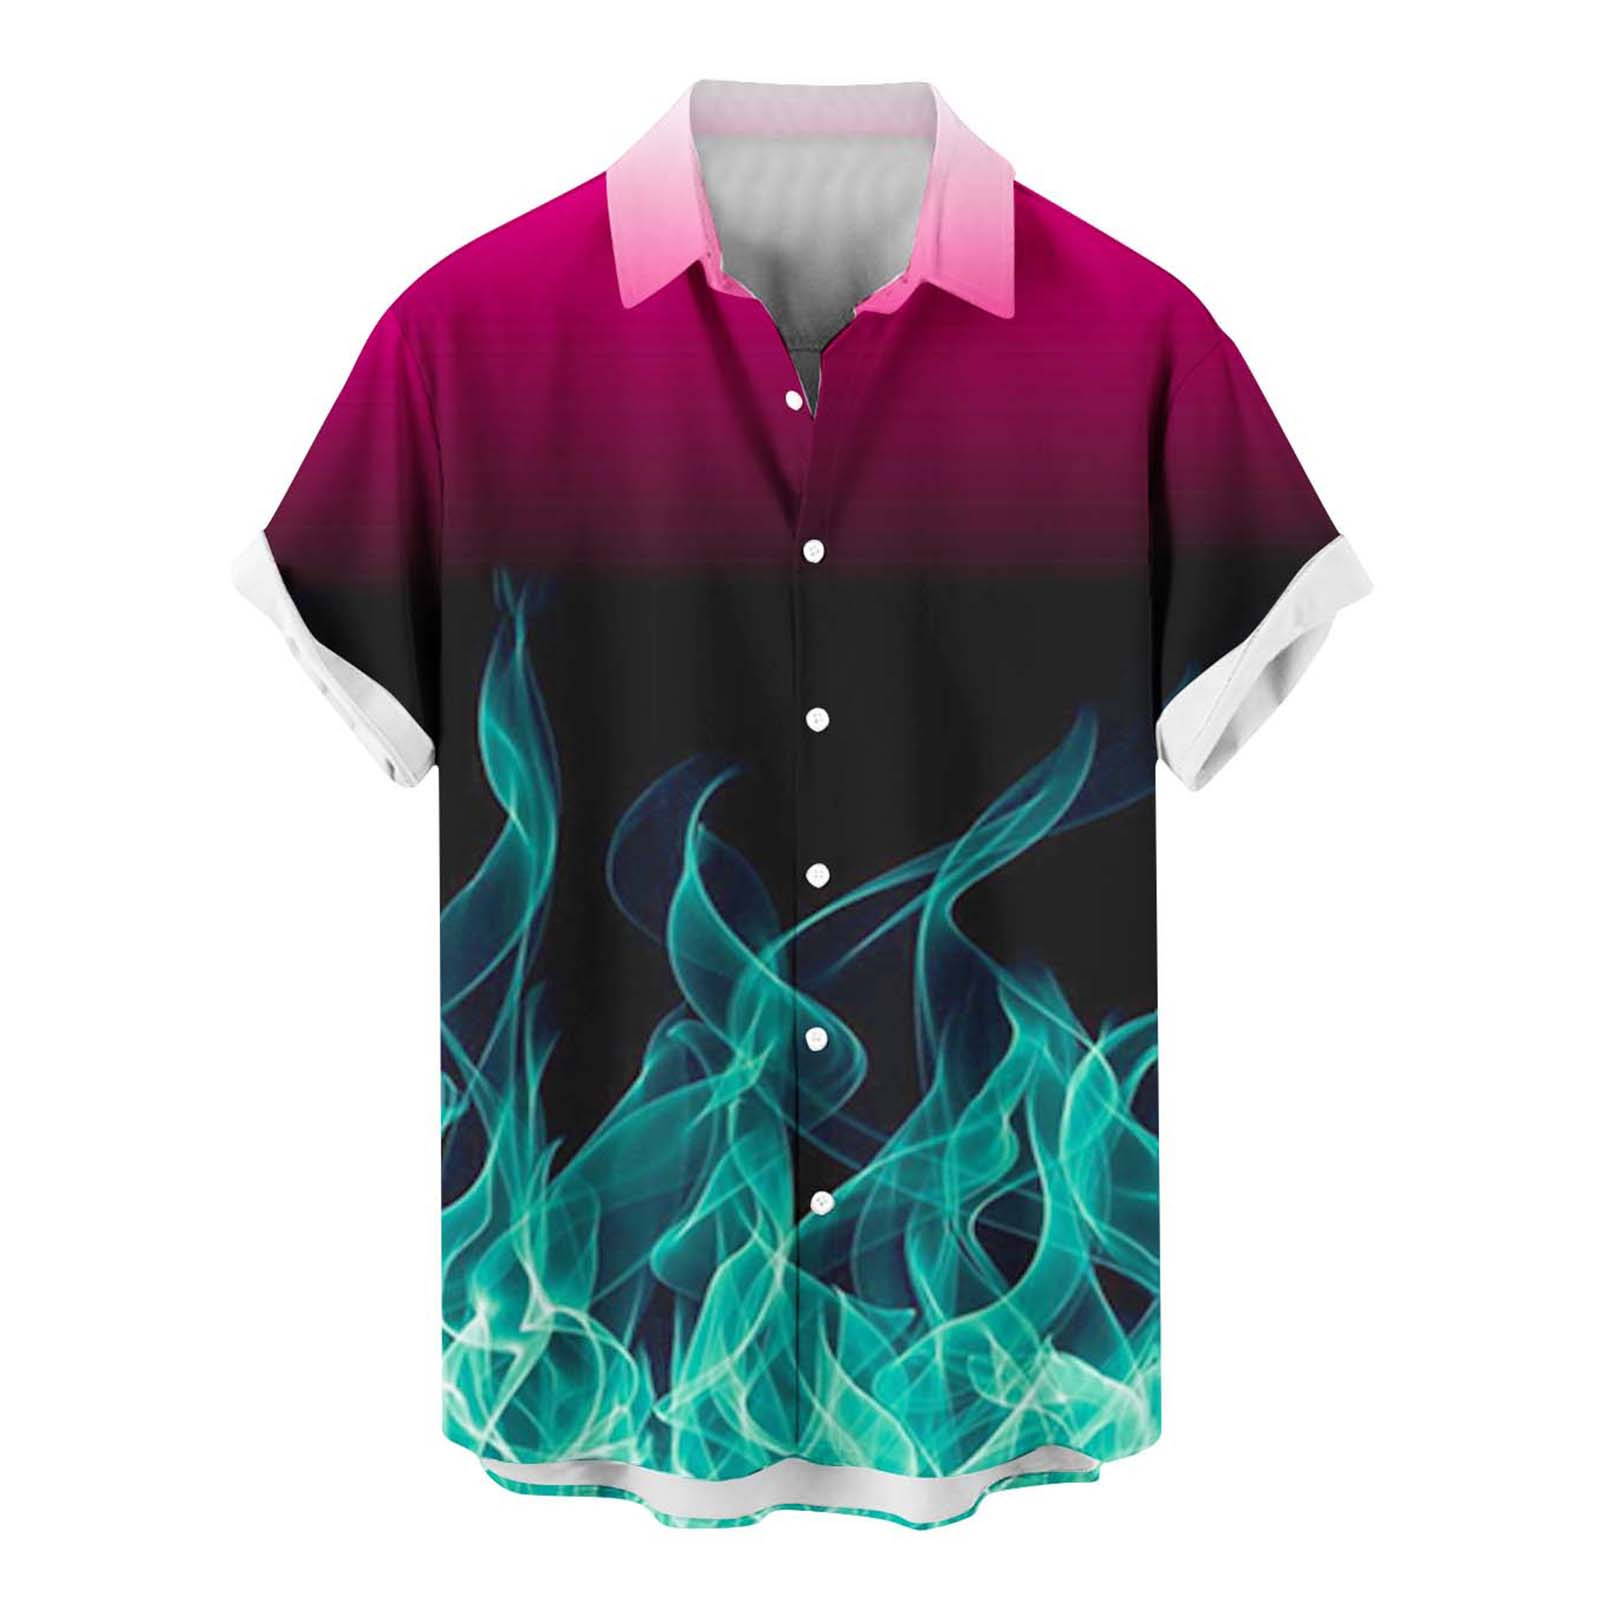 QIPOPIQ Men's Short Sleeve Turndown Collar Shirts Men 3D Fire Pattern Hawaiian Shirt Summer Fashion Printed Have Pockets Button Shirt Tops Tees Shirt Gift for Father & Him 2023 Deals Green 2XL - image 1 of 4